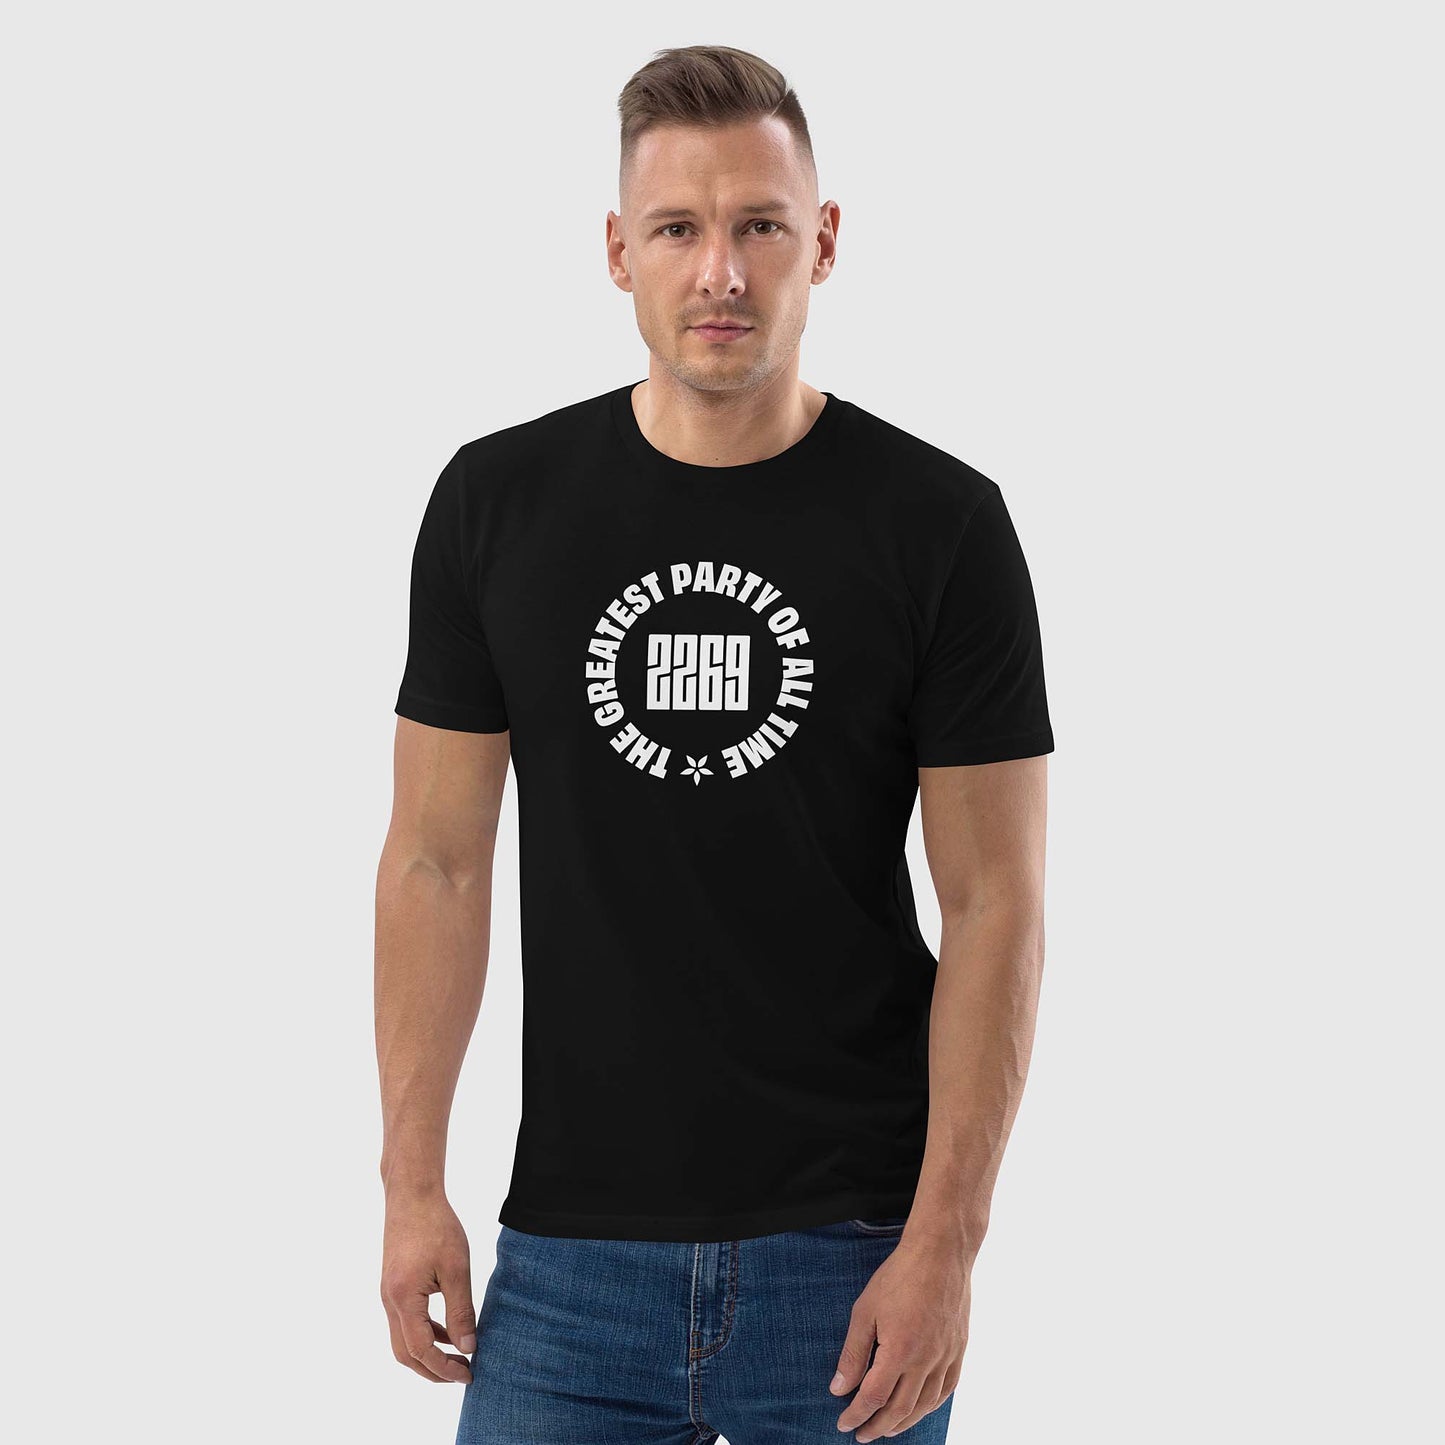 Men's black organic cotton t-shirt with English 2269 party circle